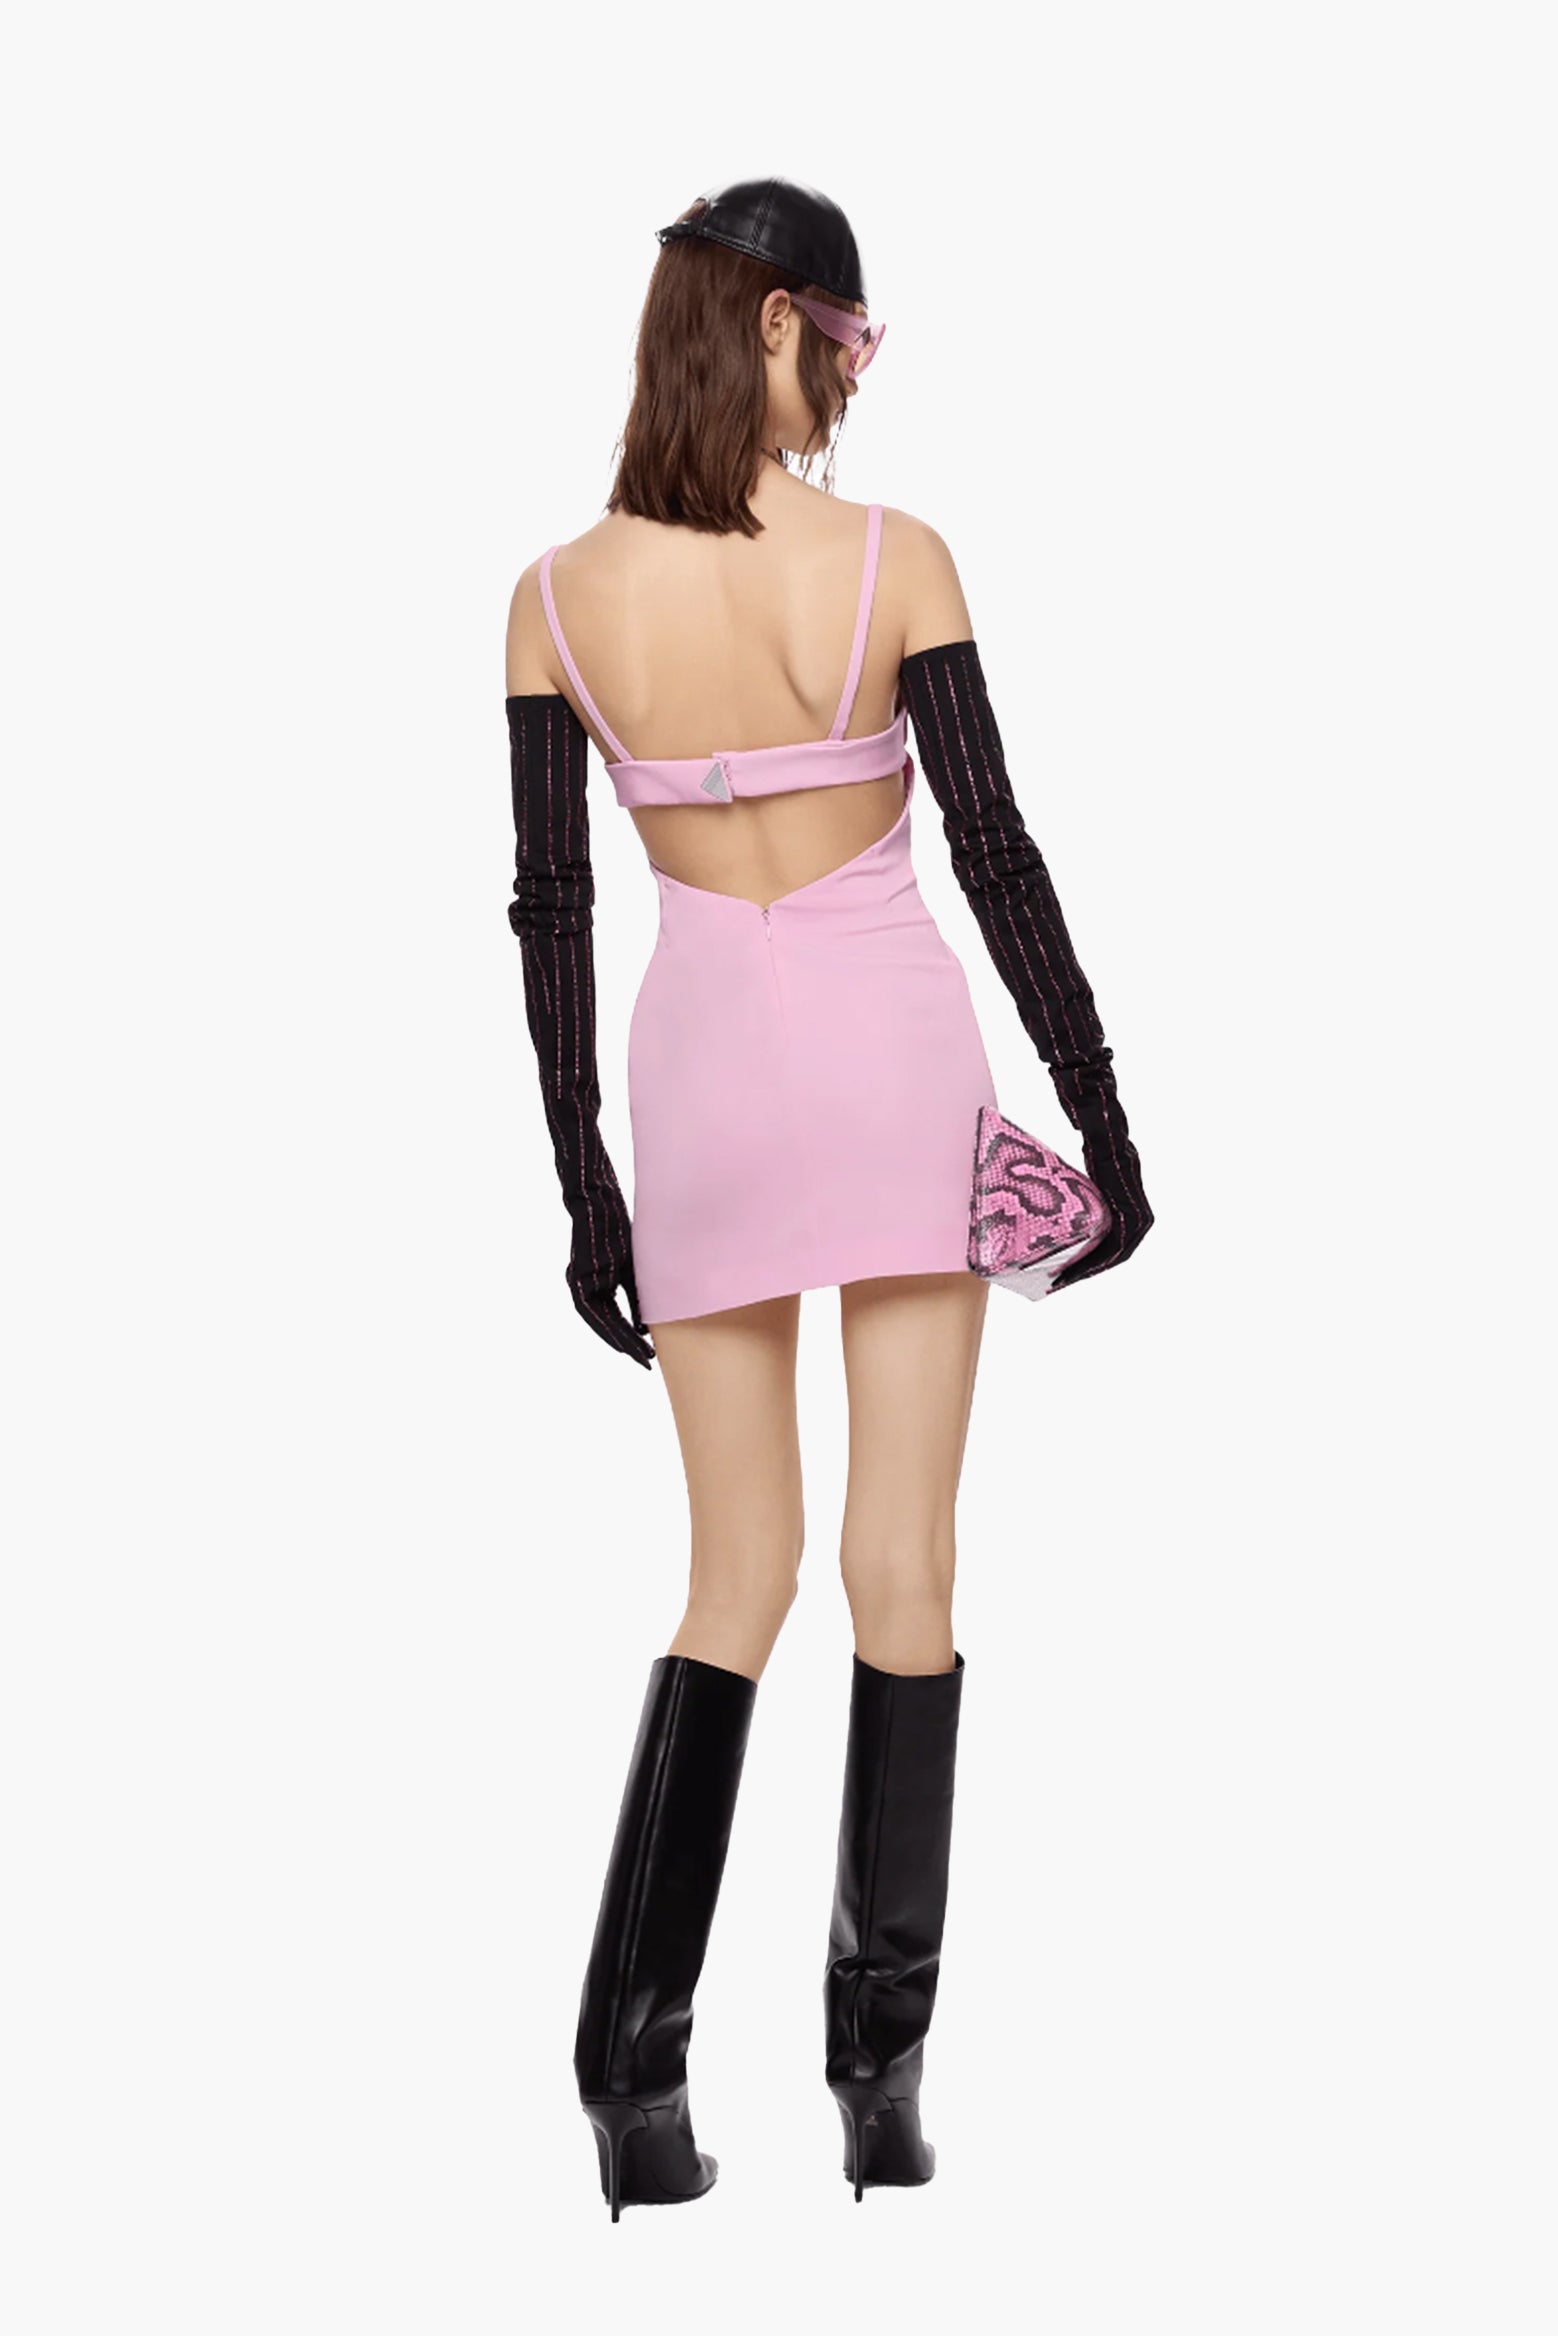 The Attico Coco Mini Dress in Sugar Pink available at The New Trend